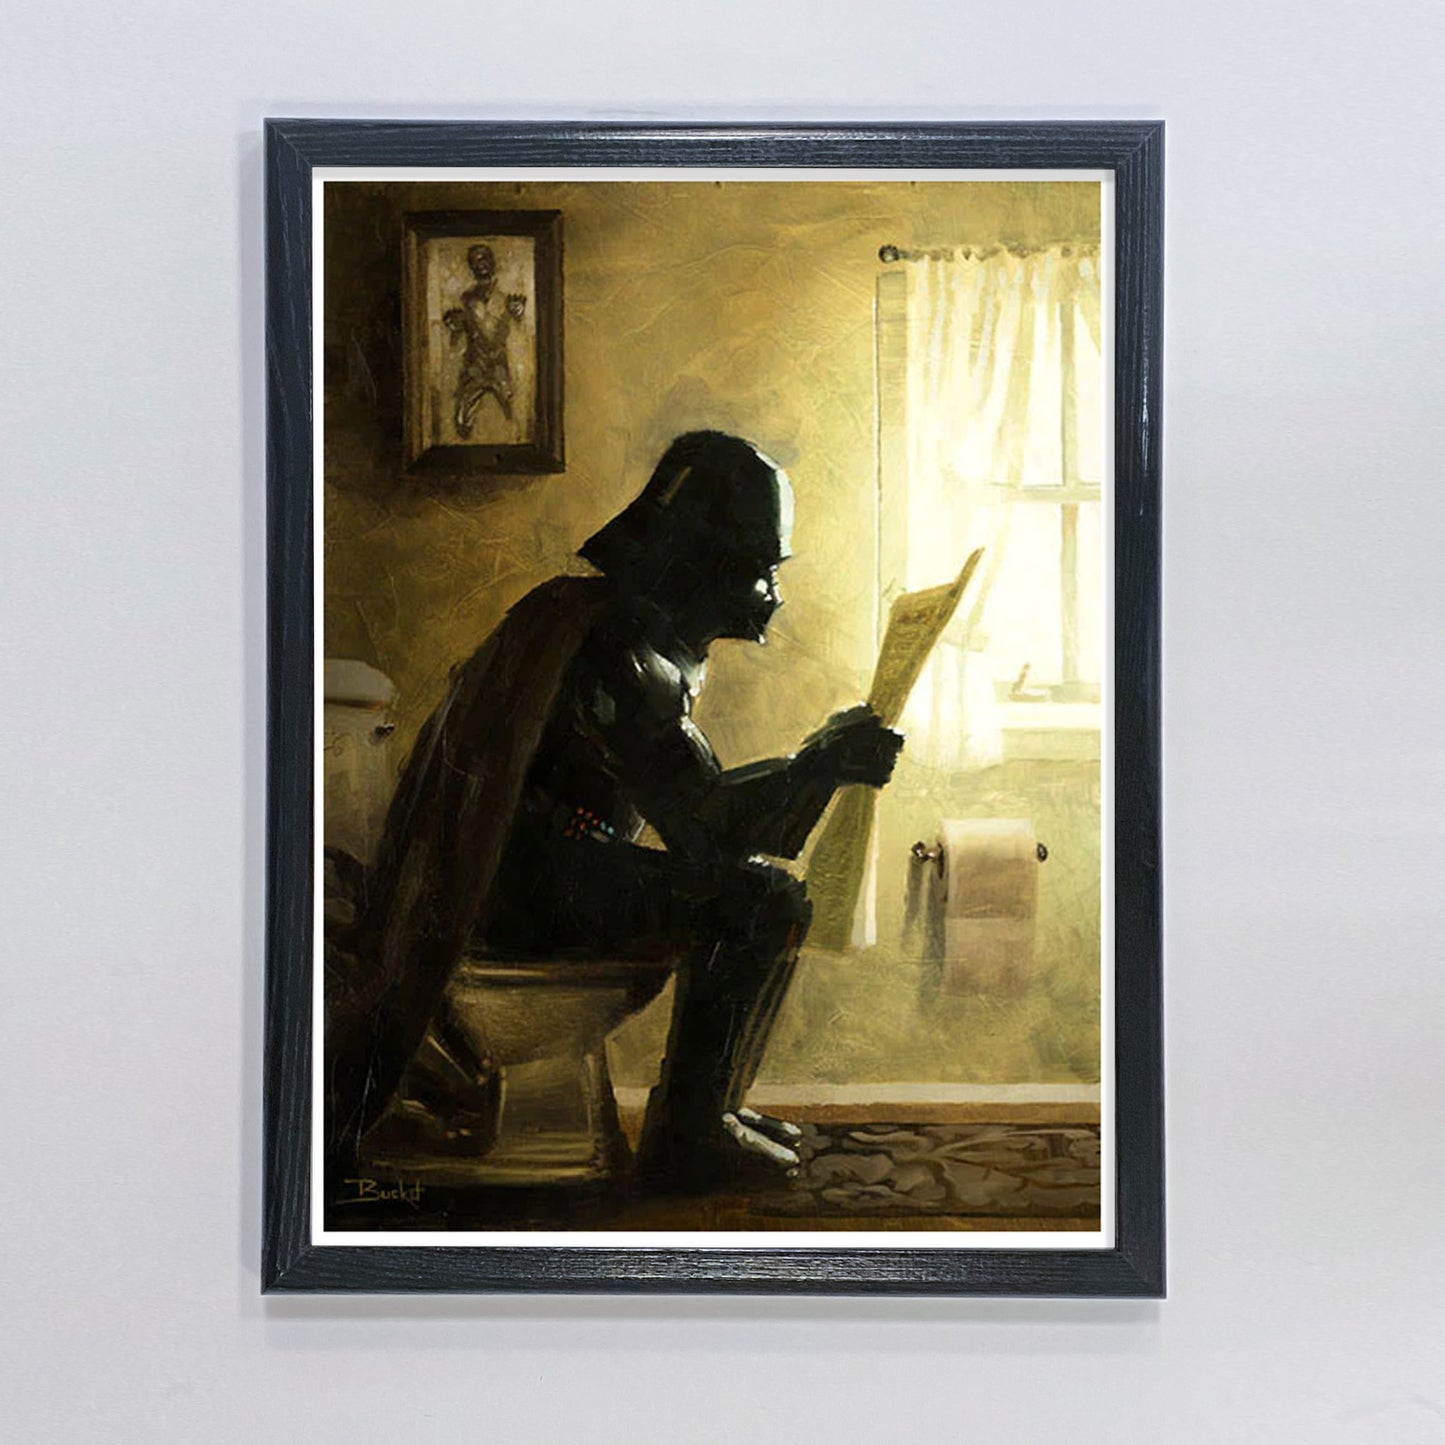 Darth Vader "Taking a Sith" Star Wars Bathroom Parody Art Print